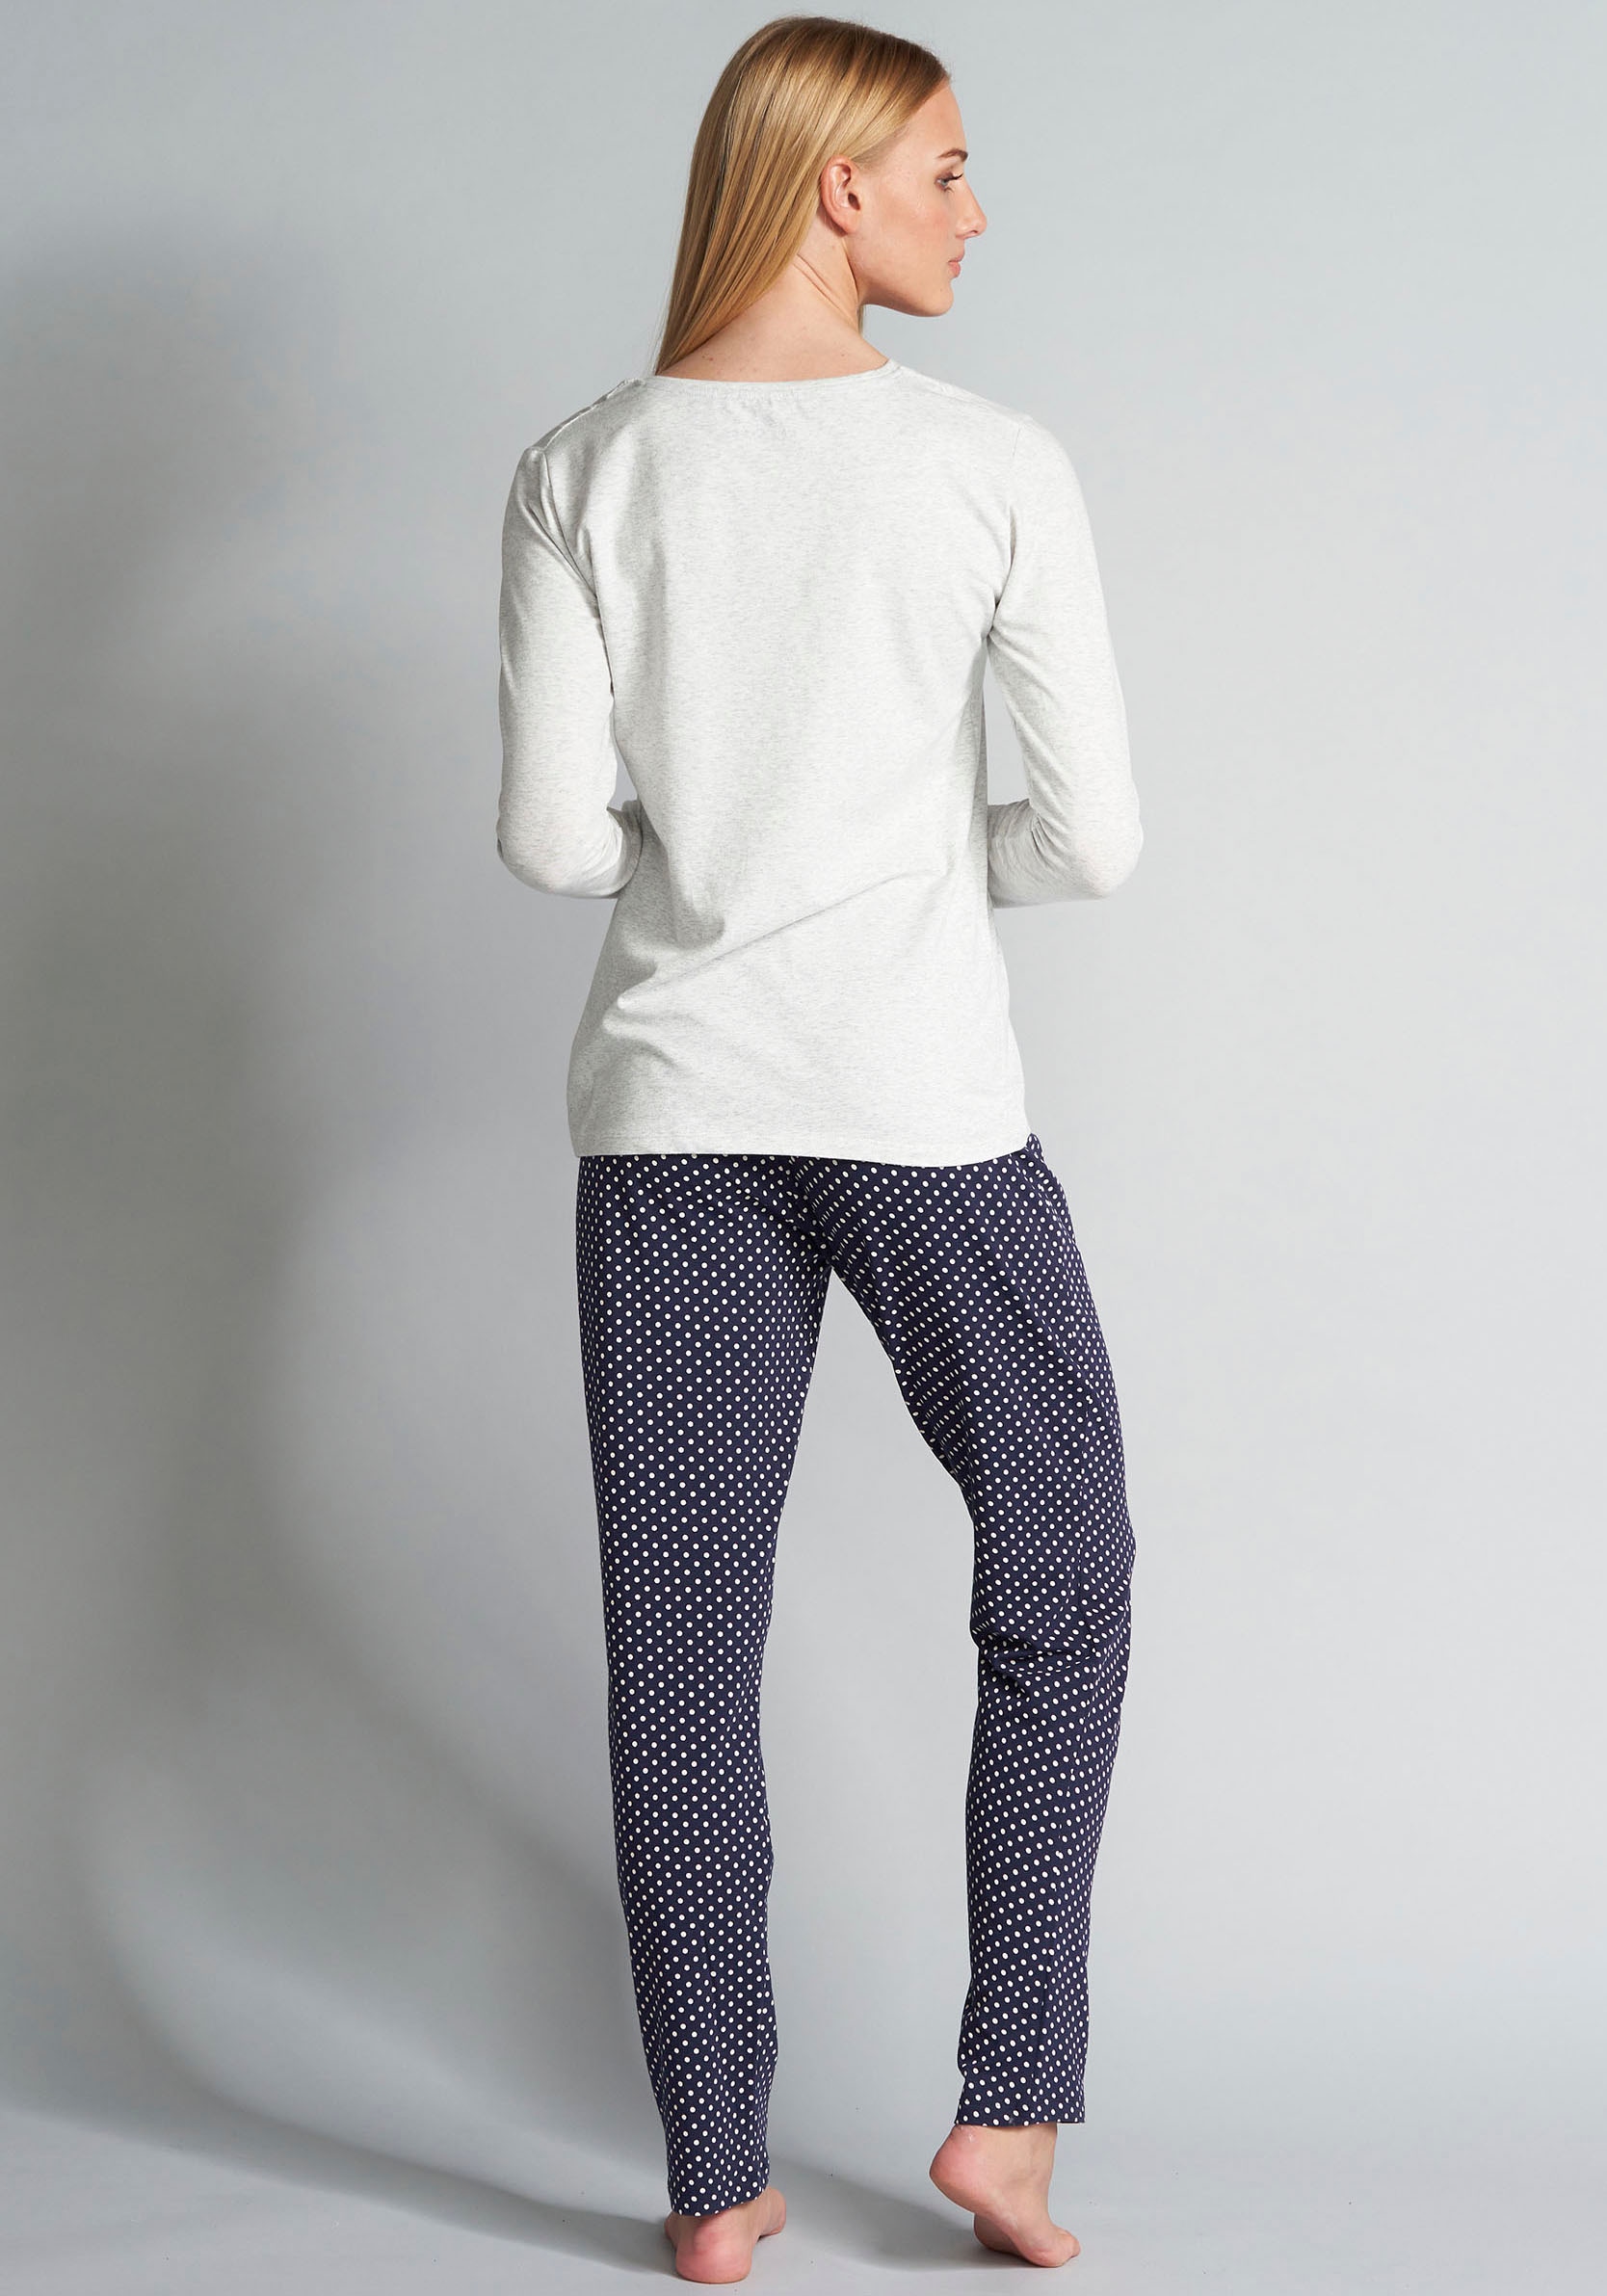 TOM TAILOR Pyjama, BAUR 2tlg. Damenschlafanzug kaufen 